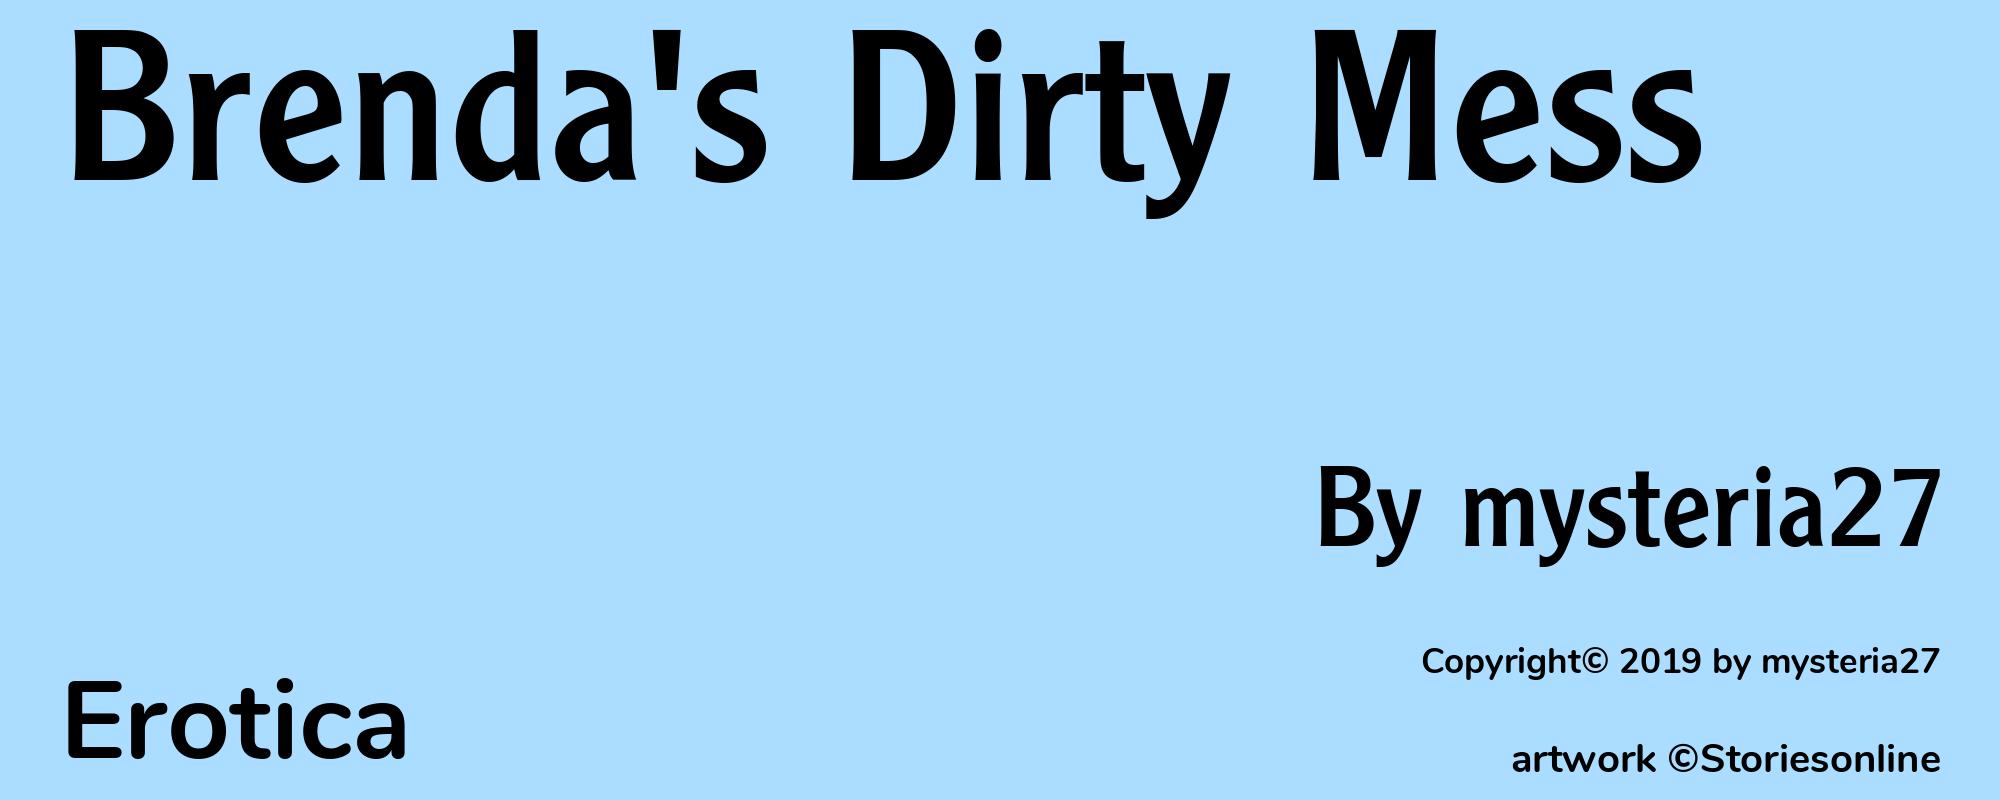 Brenda's Dirty Mess - Cover